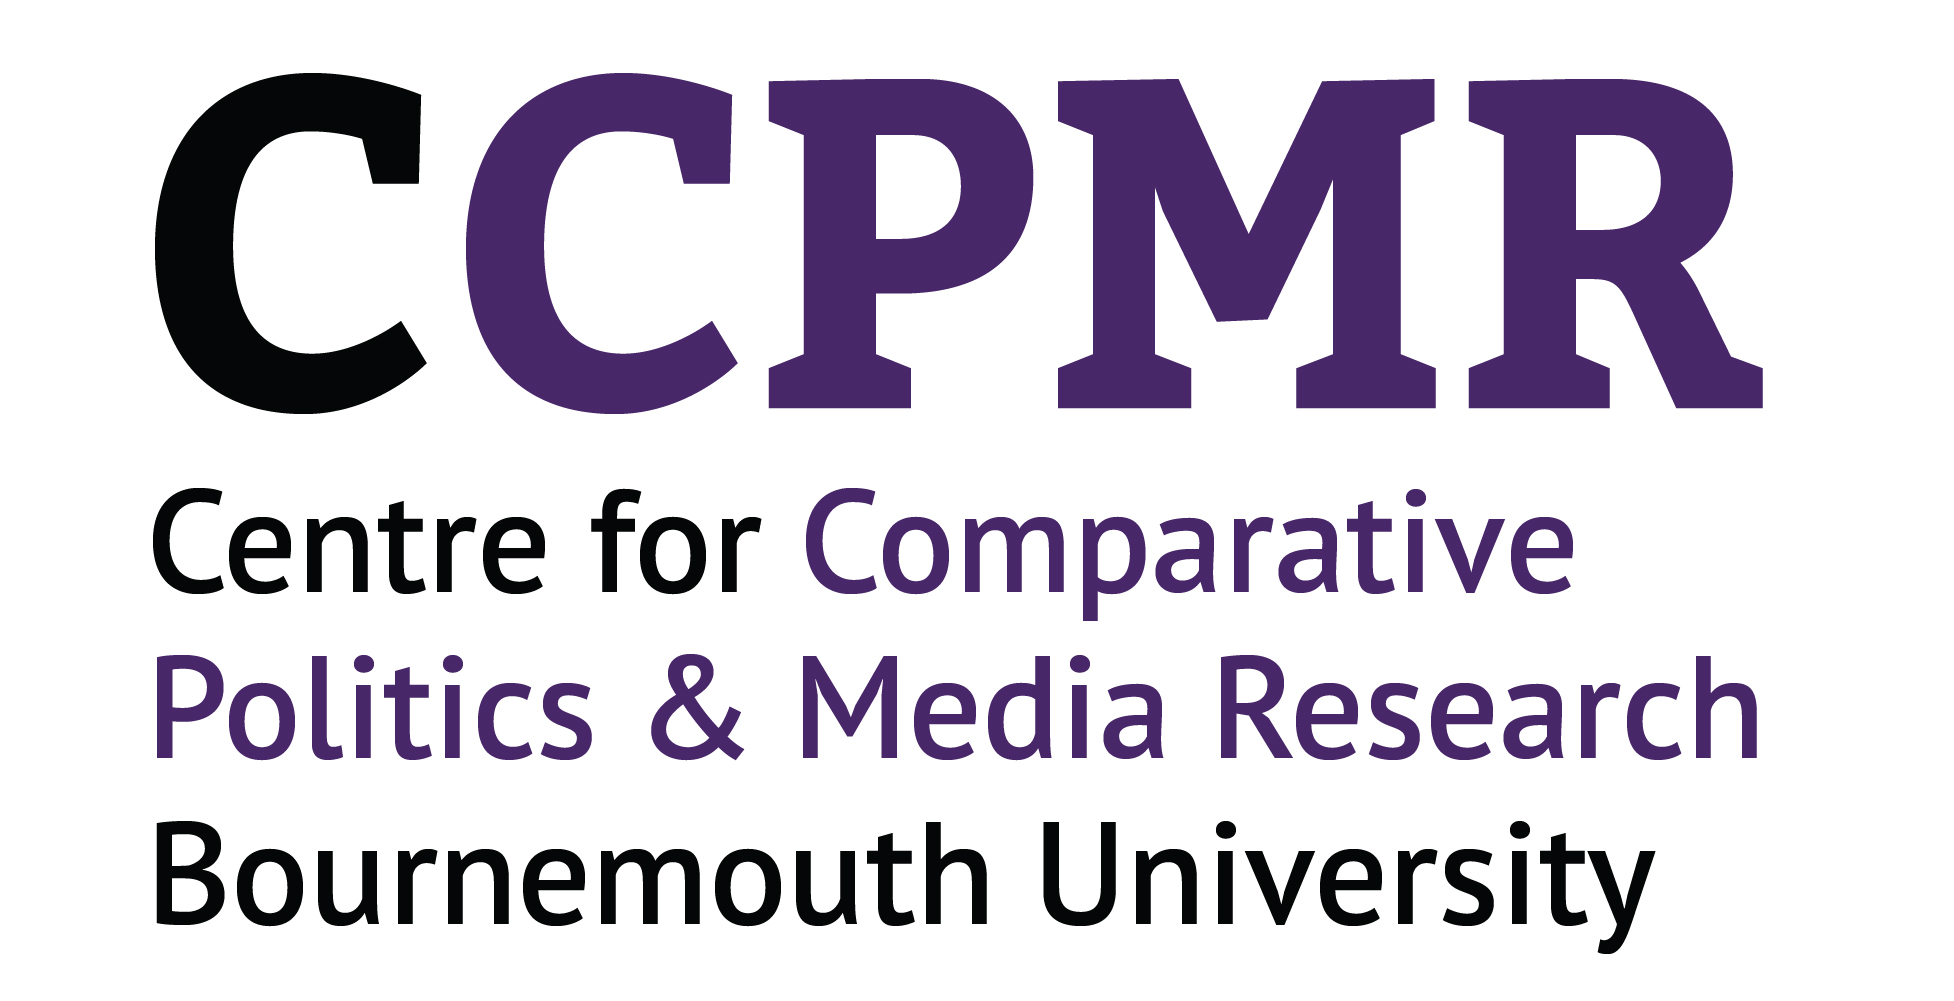 Centre for Comparative Politics and Media Research